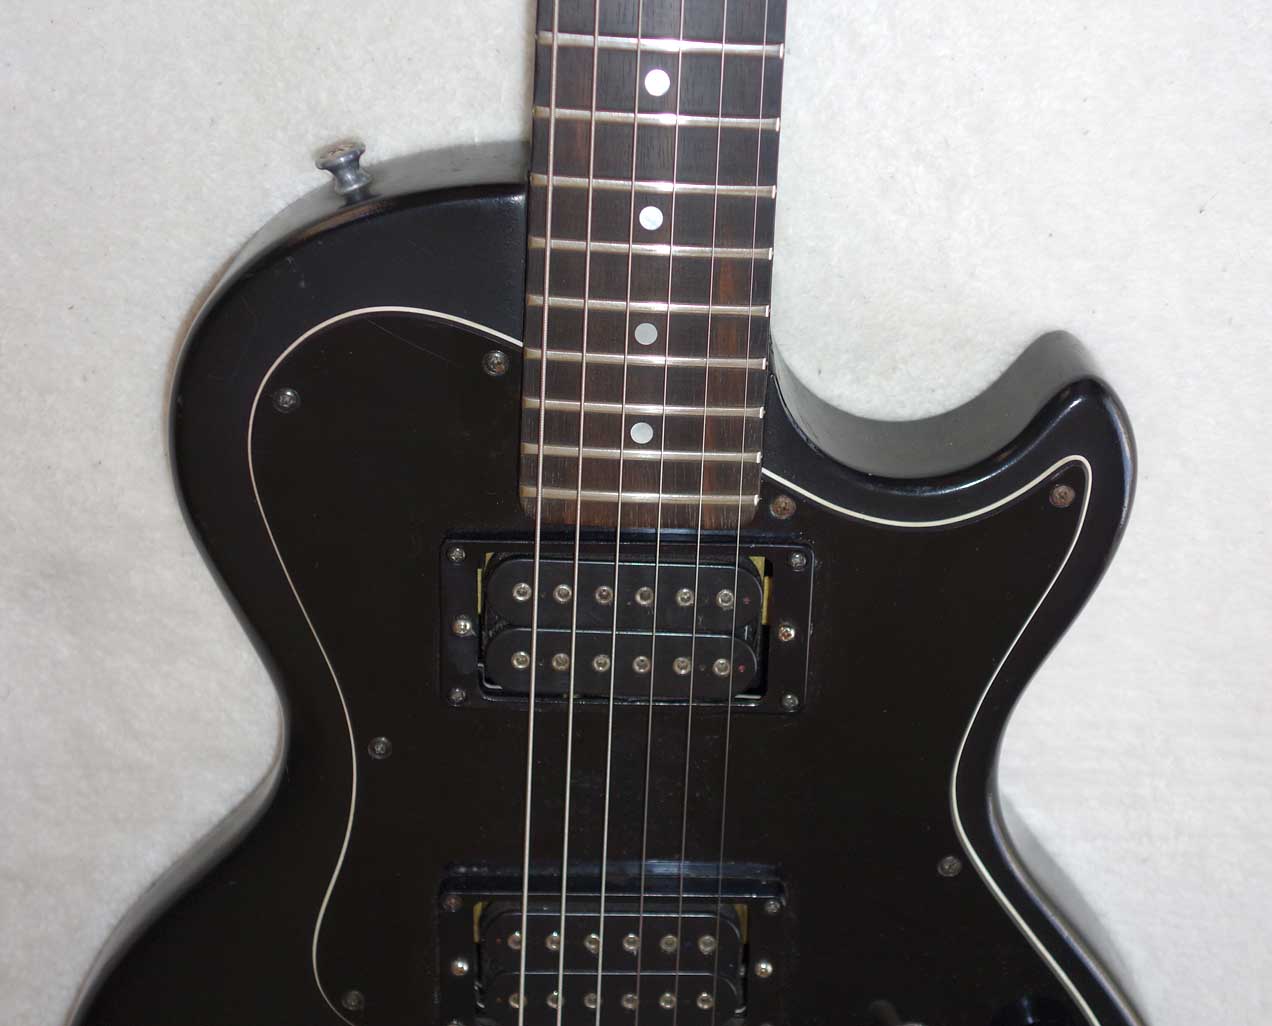 Vintage 1980 Gibson Sonex 180 Custom Solid Body Guitar w/DiMarzio Super Distortion Coil-Splits